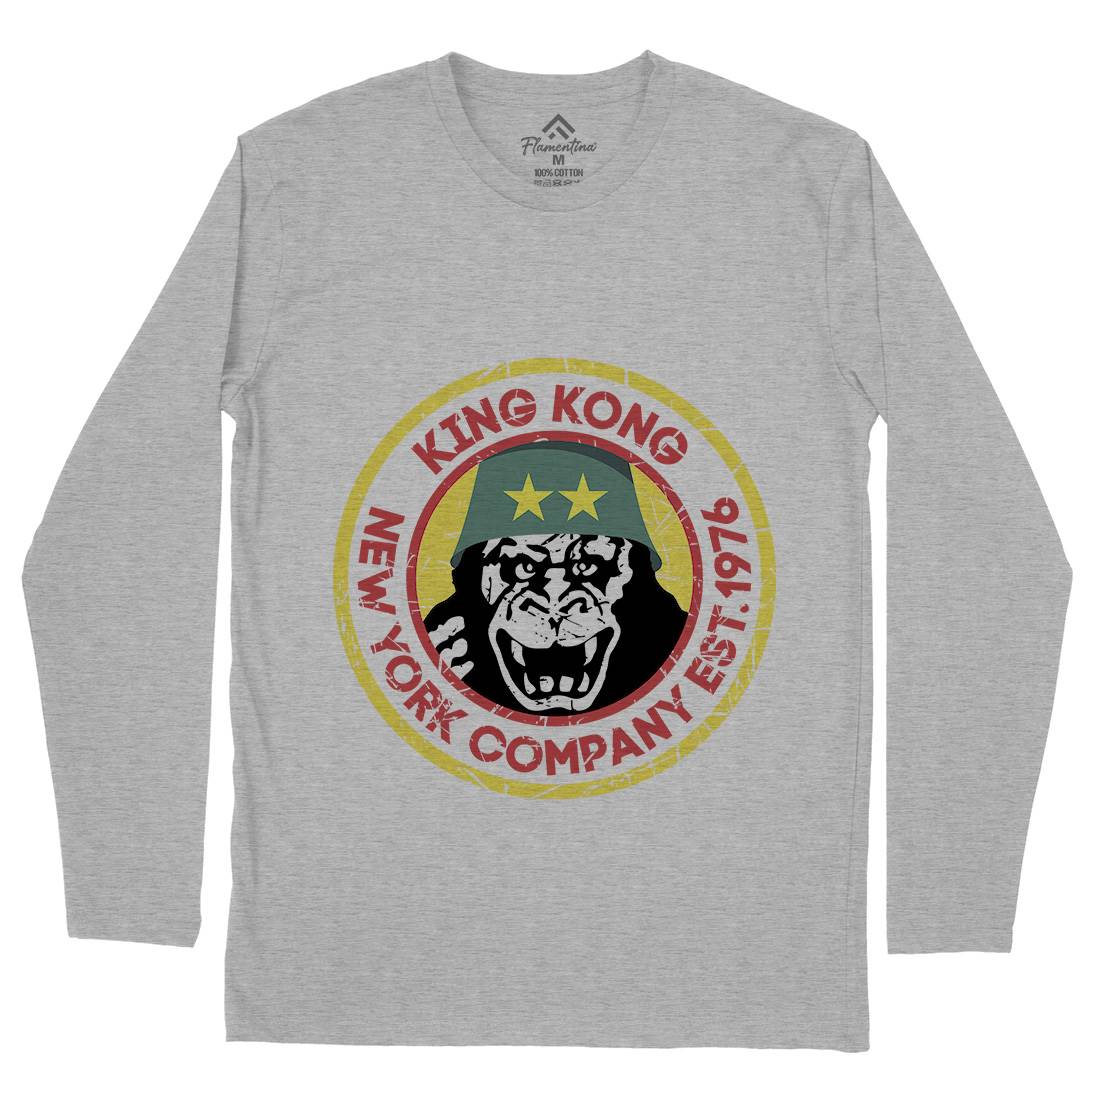 King Kong Company Mens Long Sleeve T-Shirt Retro D362